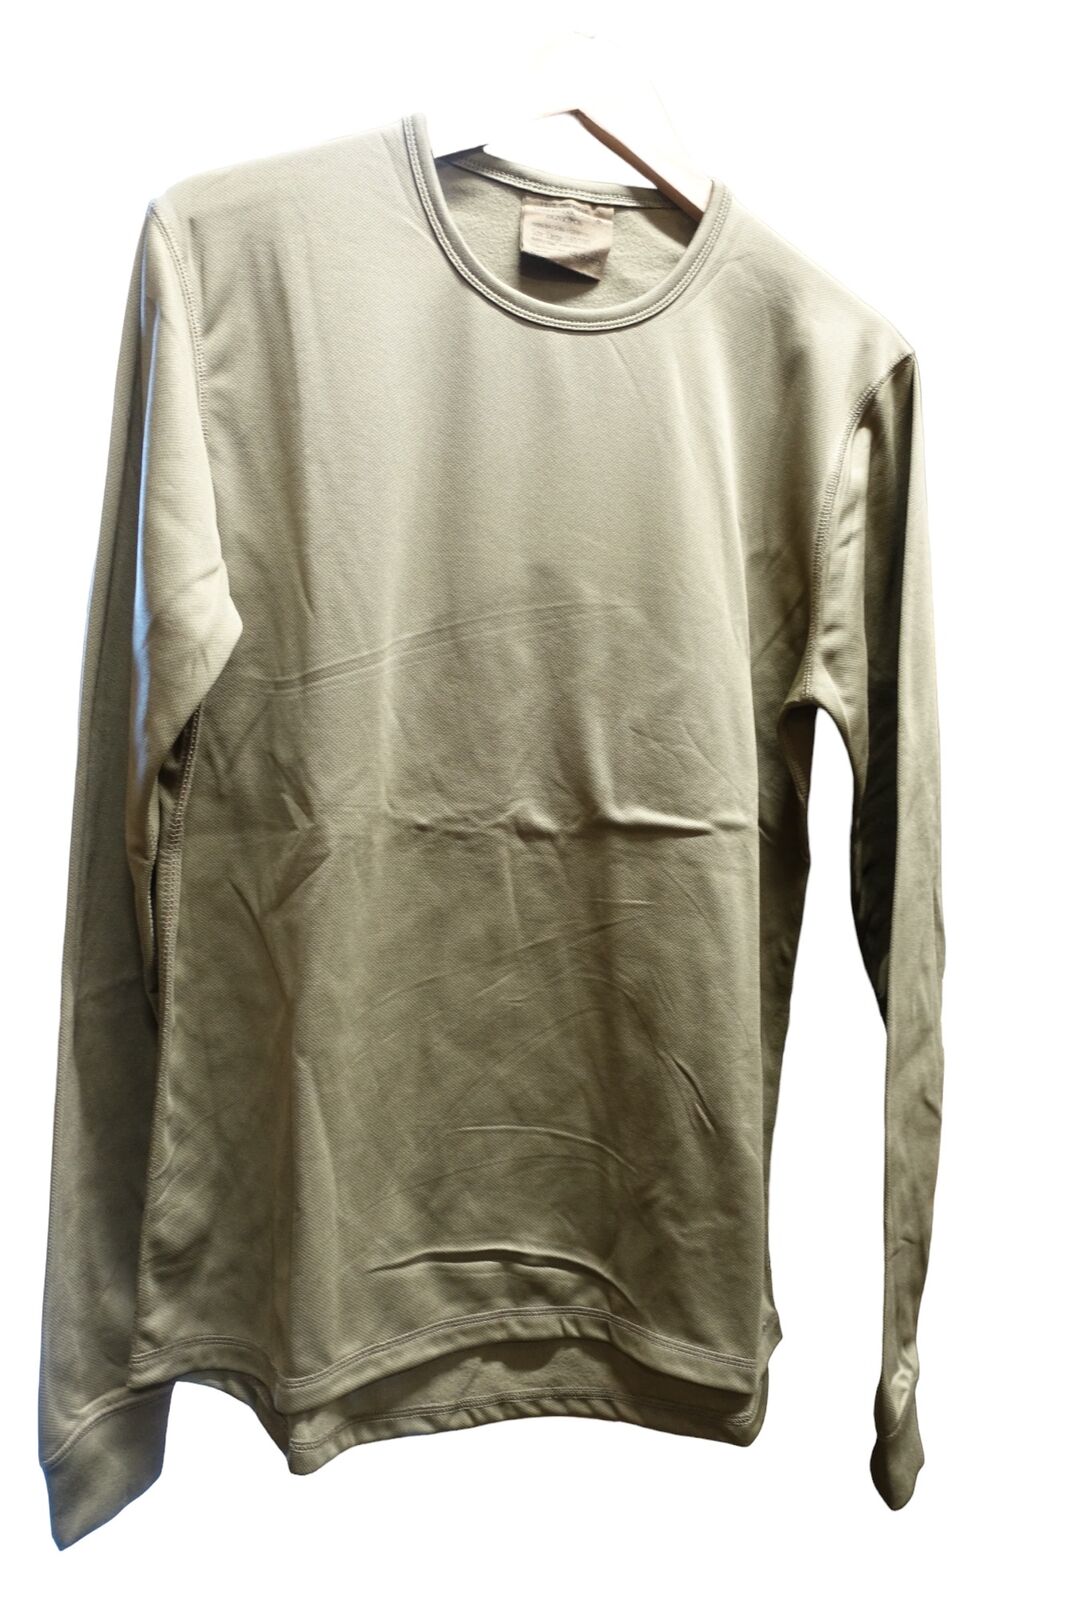 PCS Thermal Vest Shirt Light Olive British Army Long Sleeve Warm Base layer